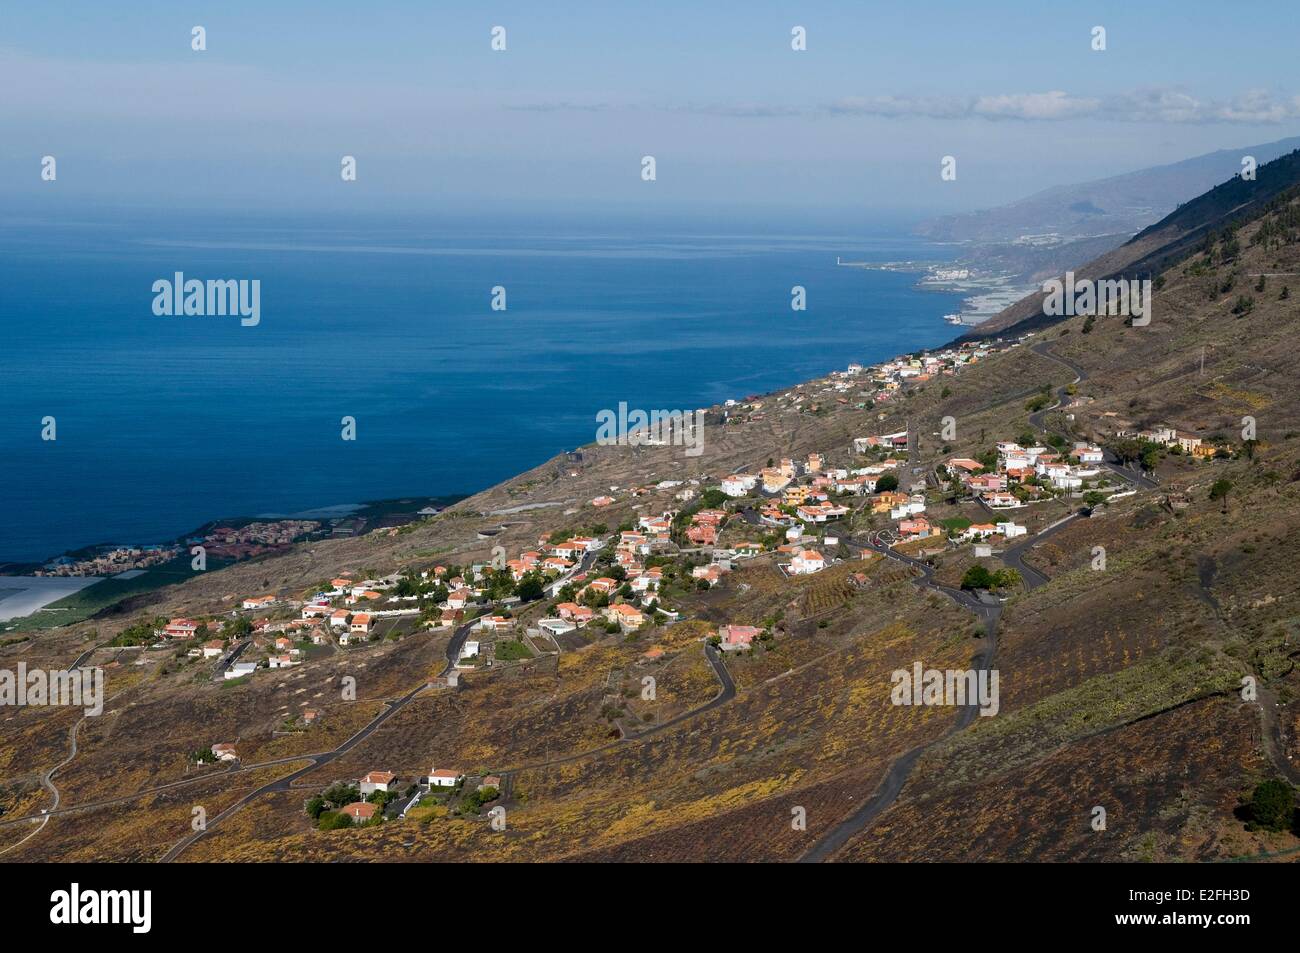 Spain, Canary Islands, La Palma, El Paso, National Park Caldera de Taburiente, sea and mountains from the crater Stock Photo